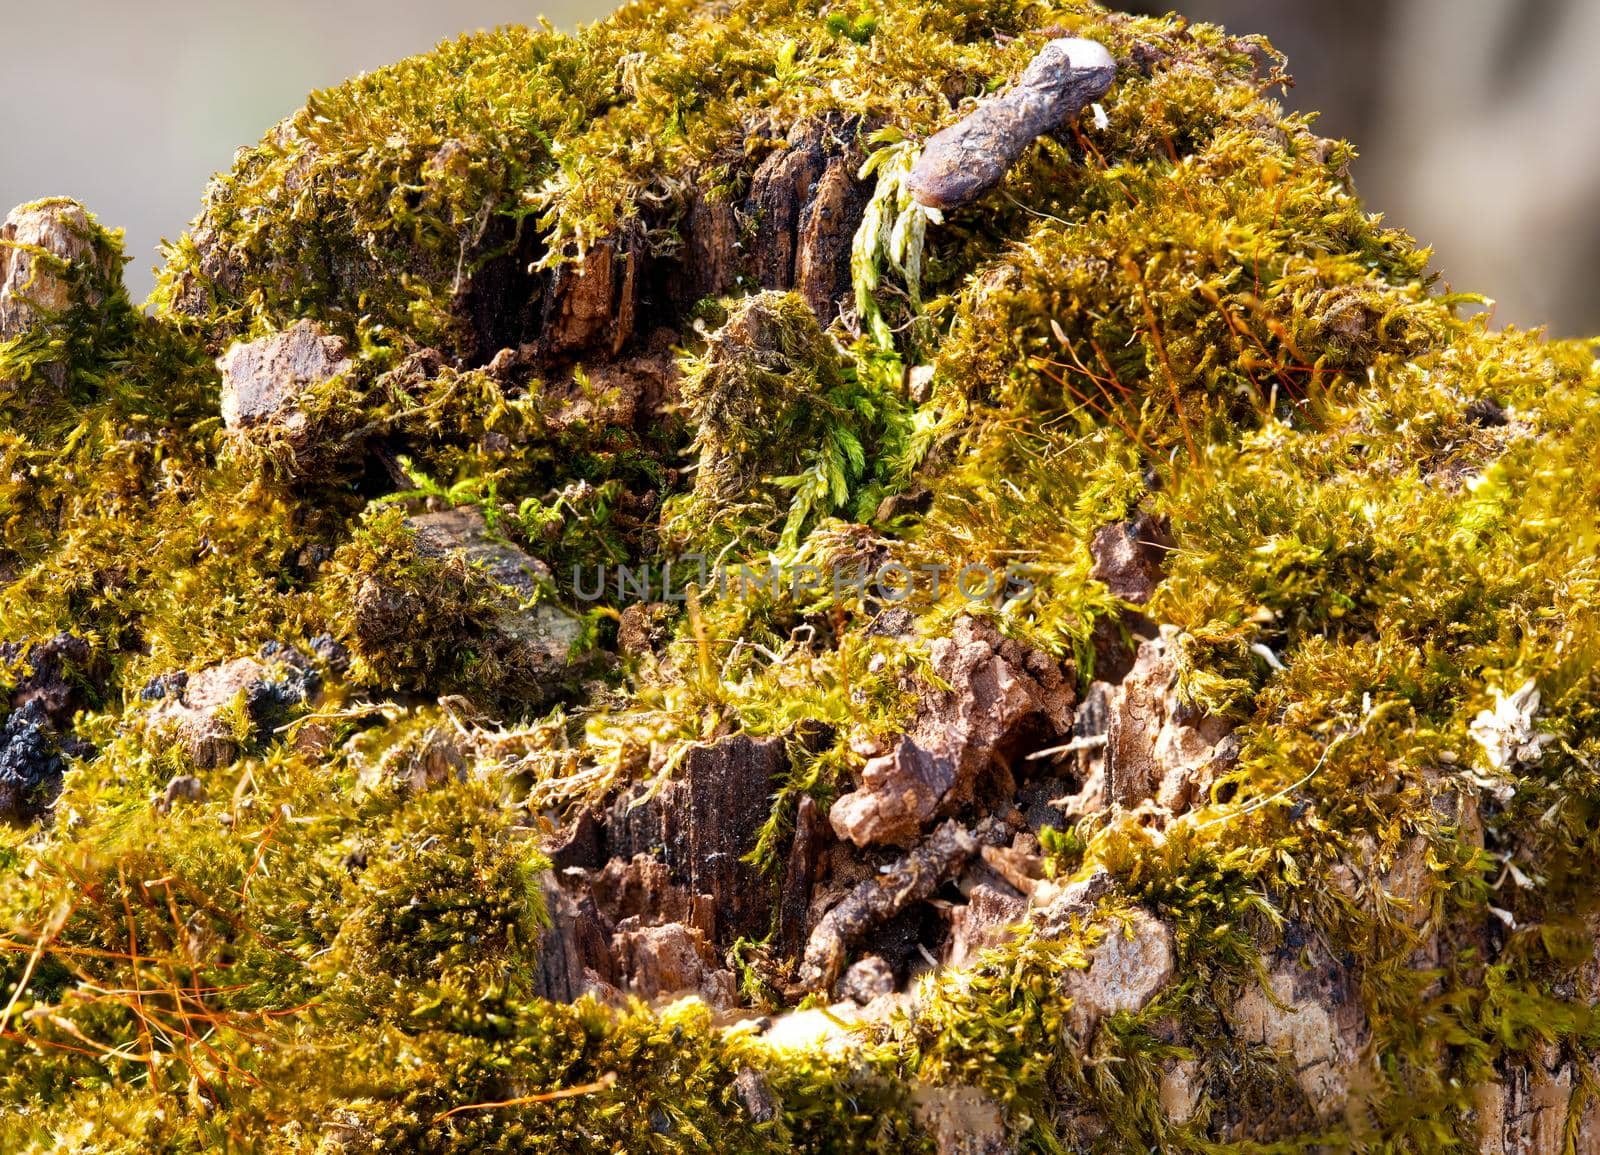 Lichen growing on top of fencepost creates a surreal miniature landscape scene.